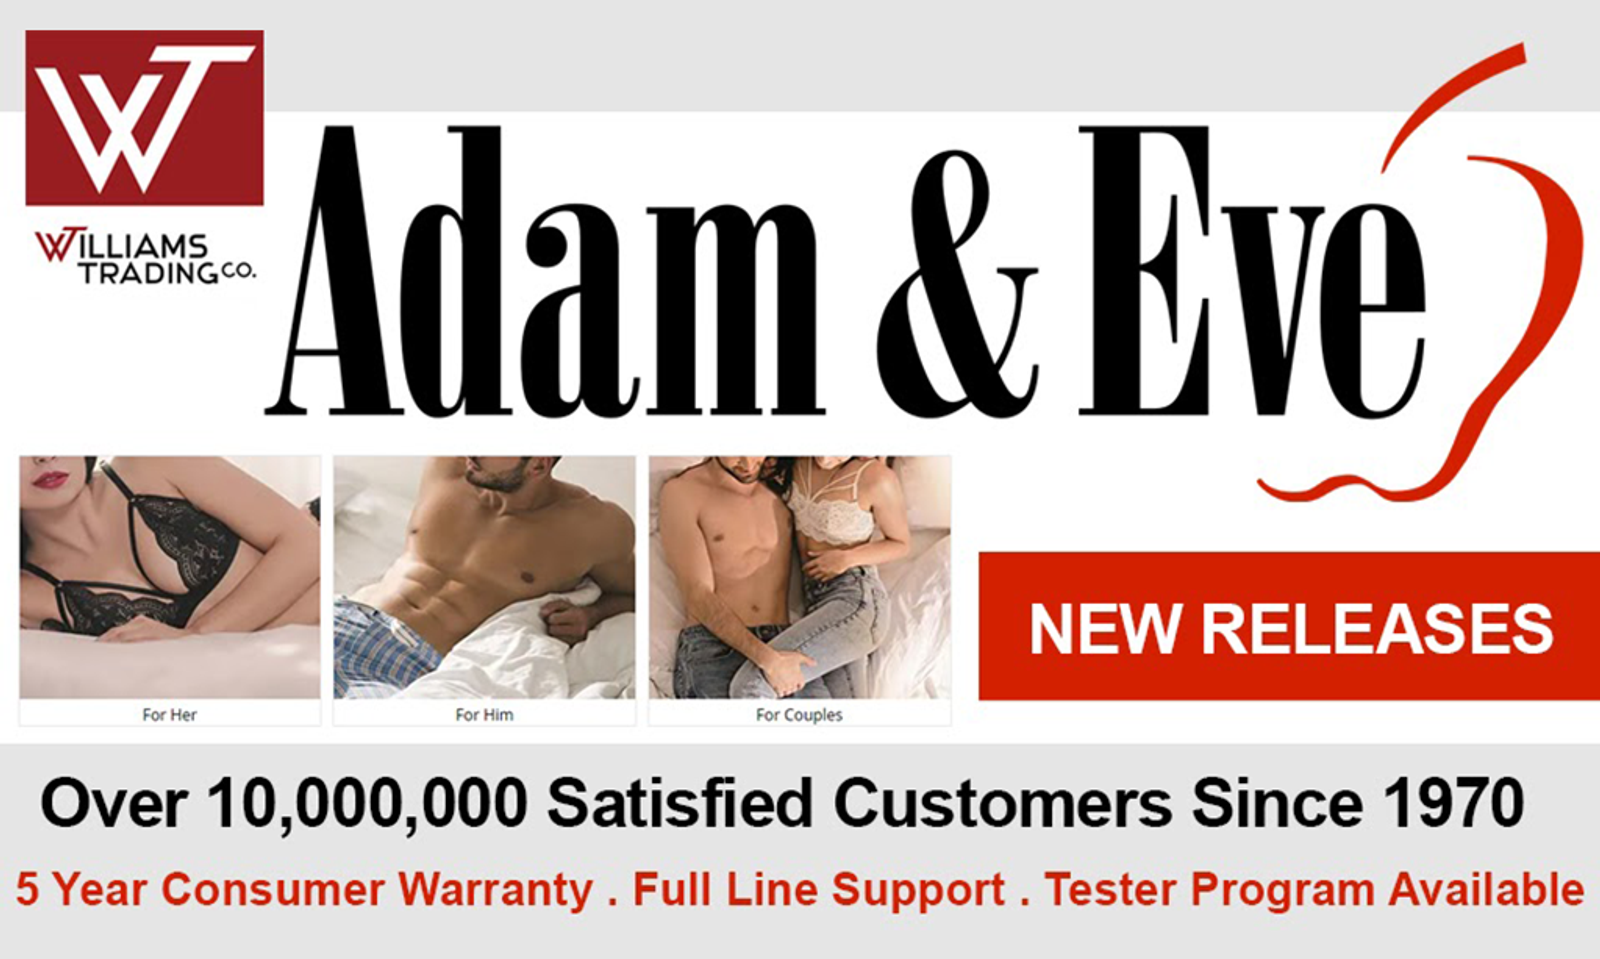 Williams Trading Creates Custom Landing Page, Link for Adam & Eve